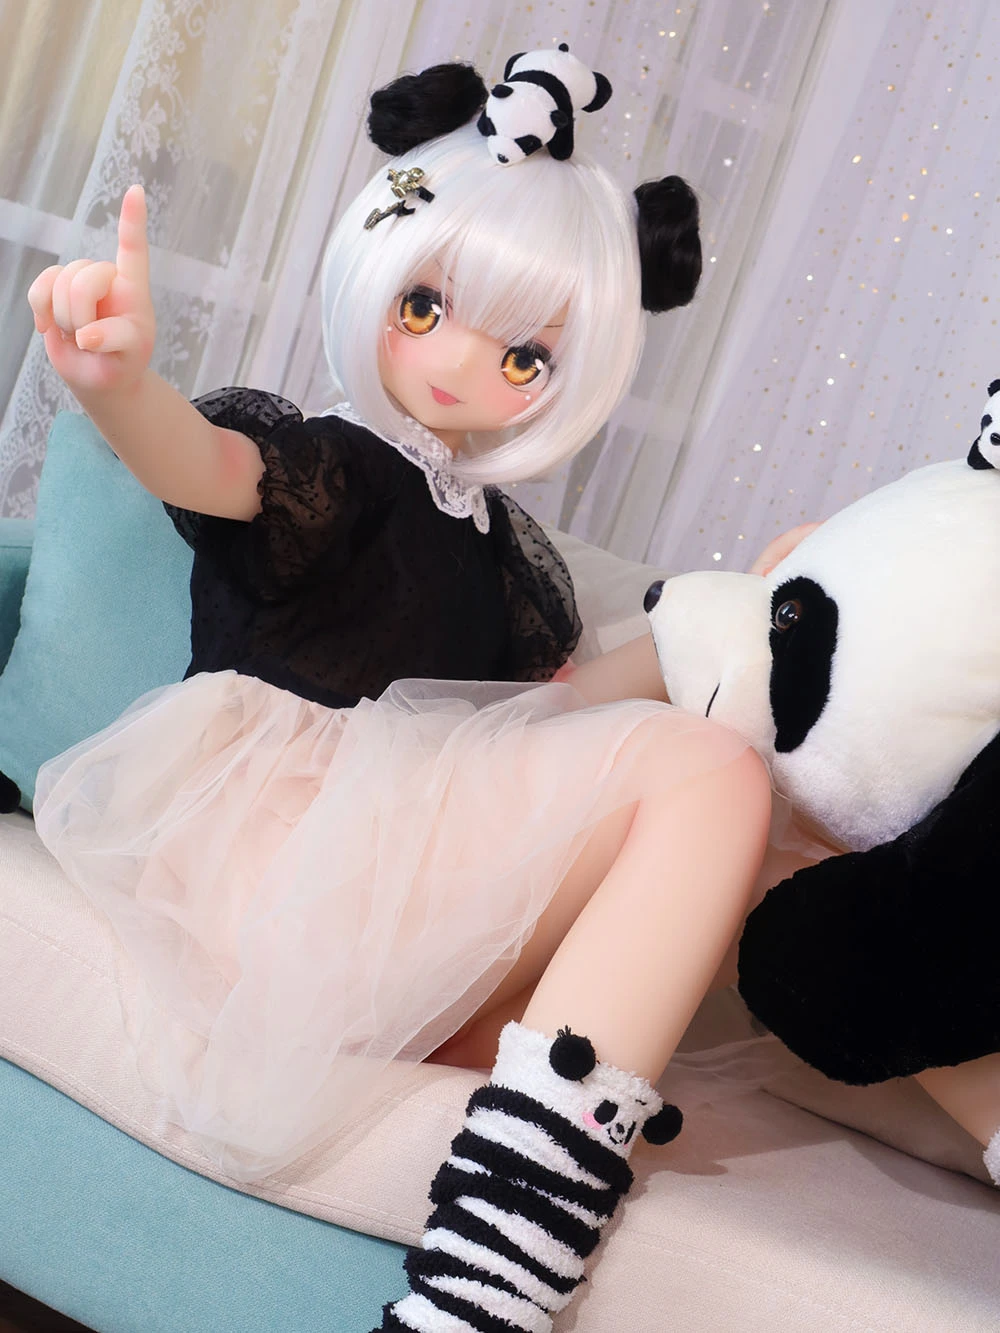 Llife-size Panda Daughter Sexdoll